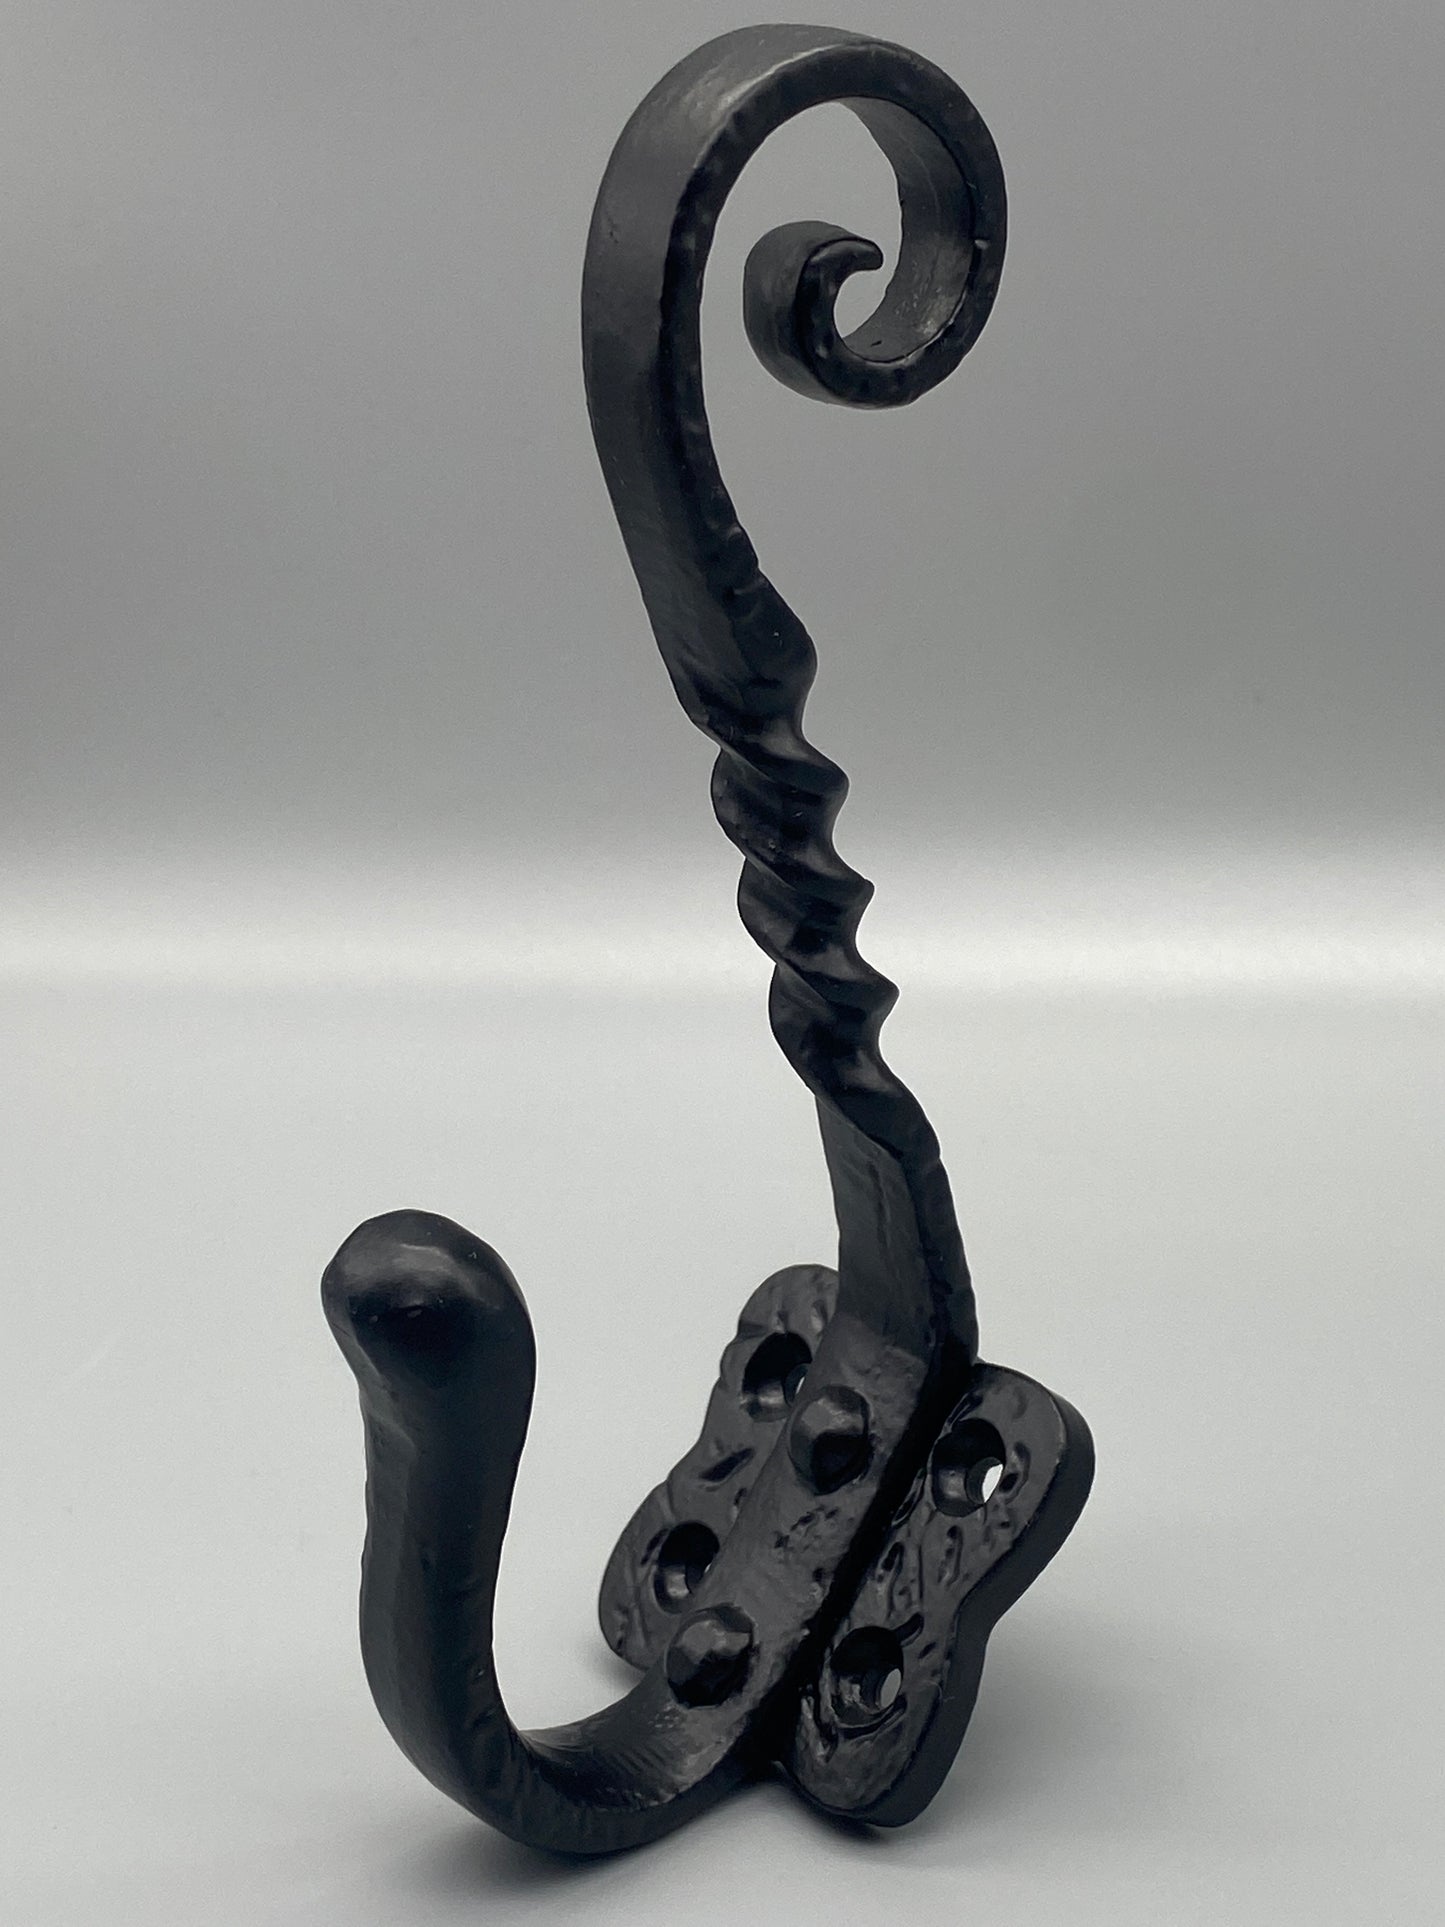 Pair of Forged Double Metal Black Hooks - Antiqued Metal Hook Coat & Hat - 2pcs